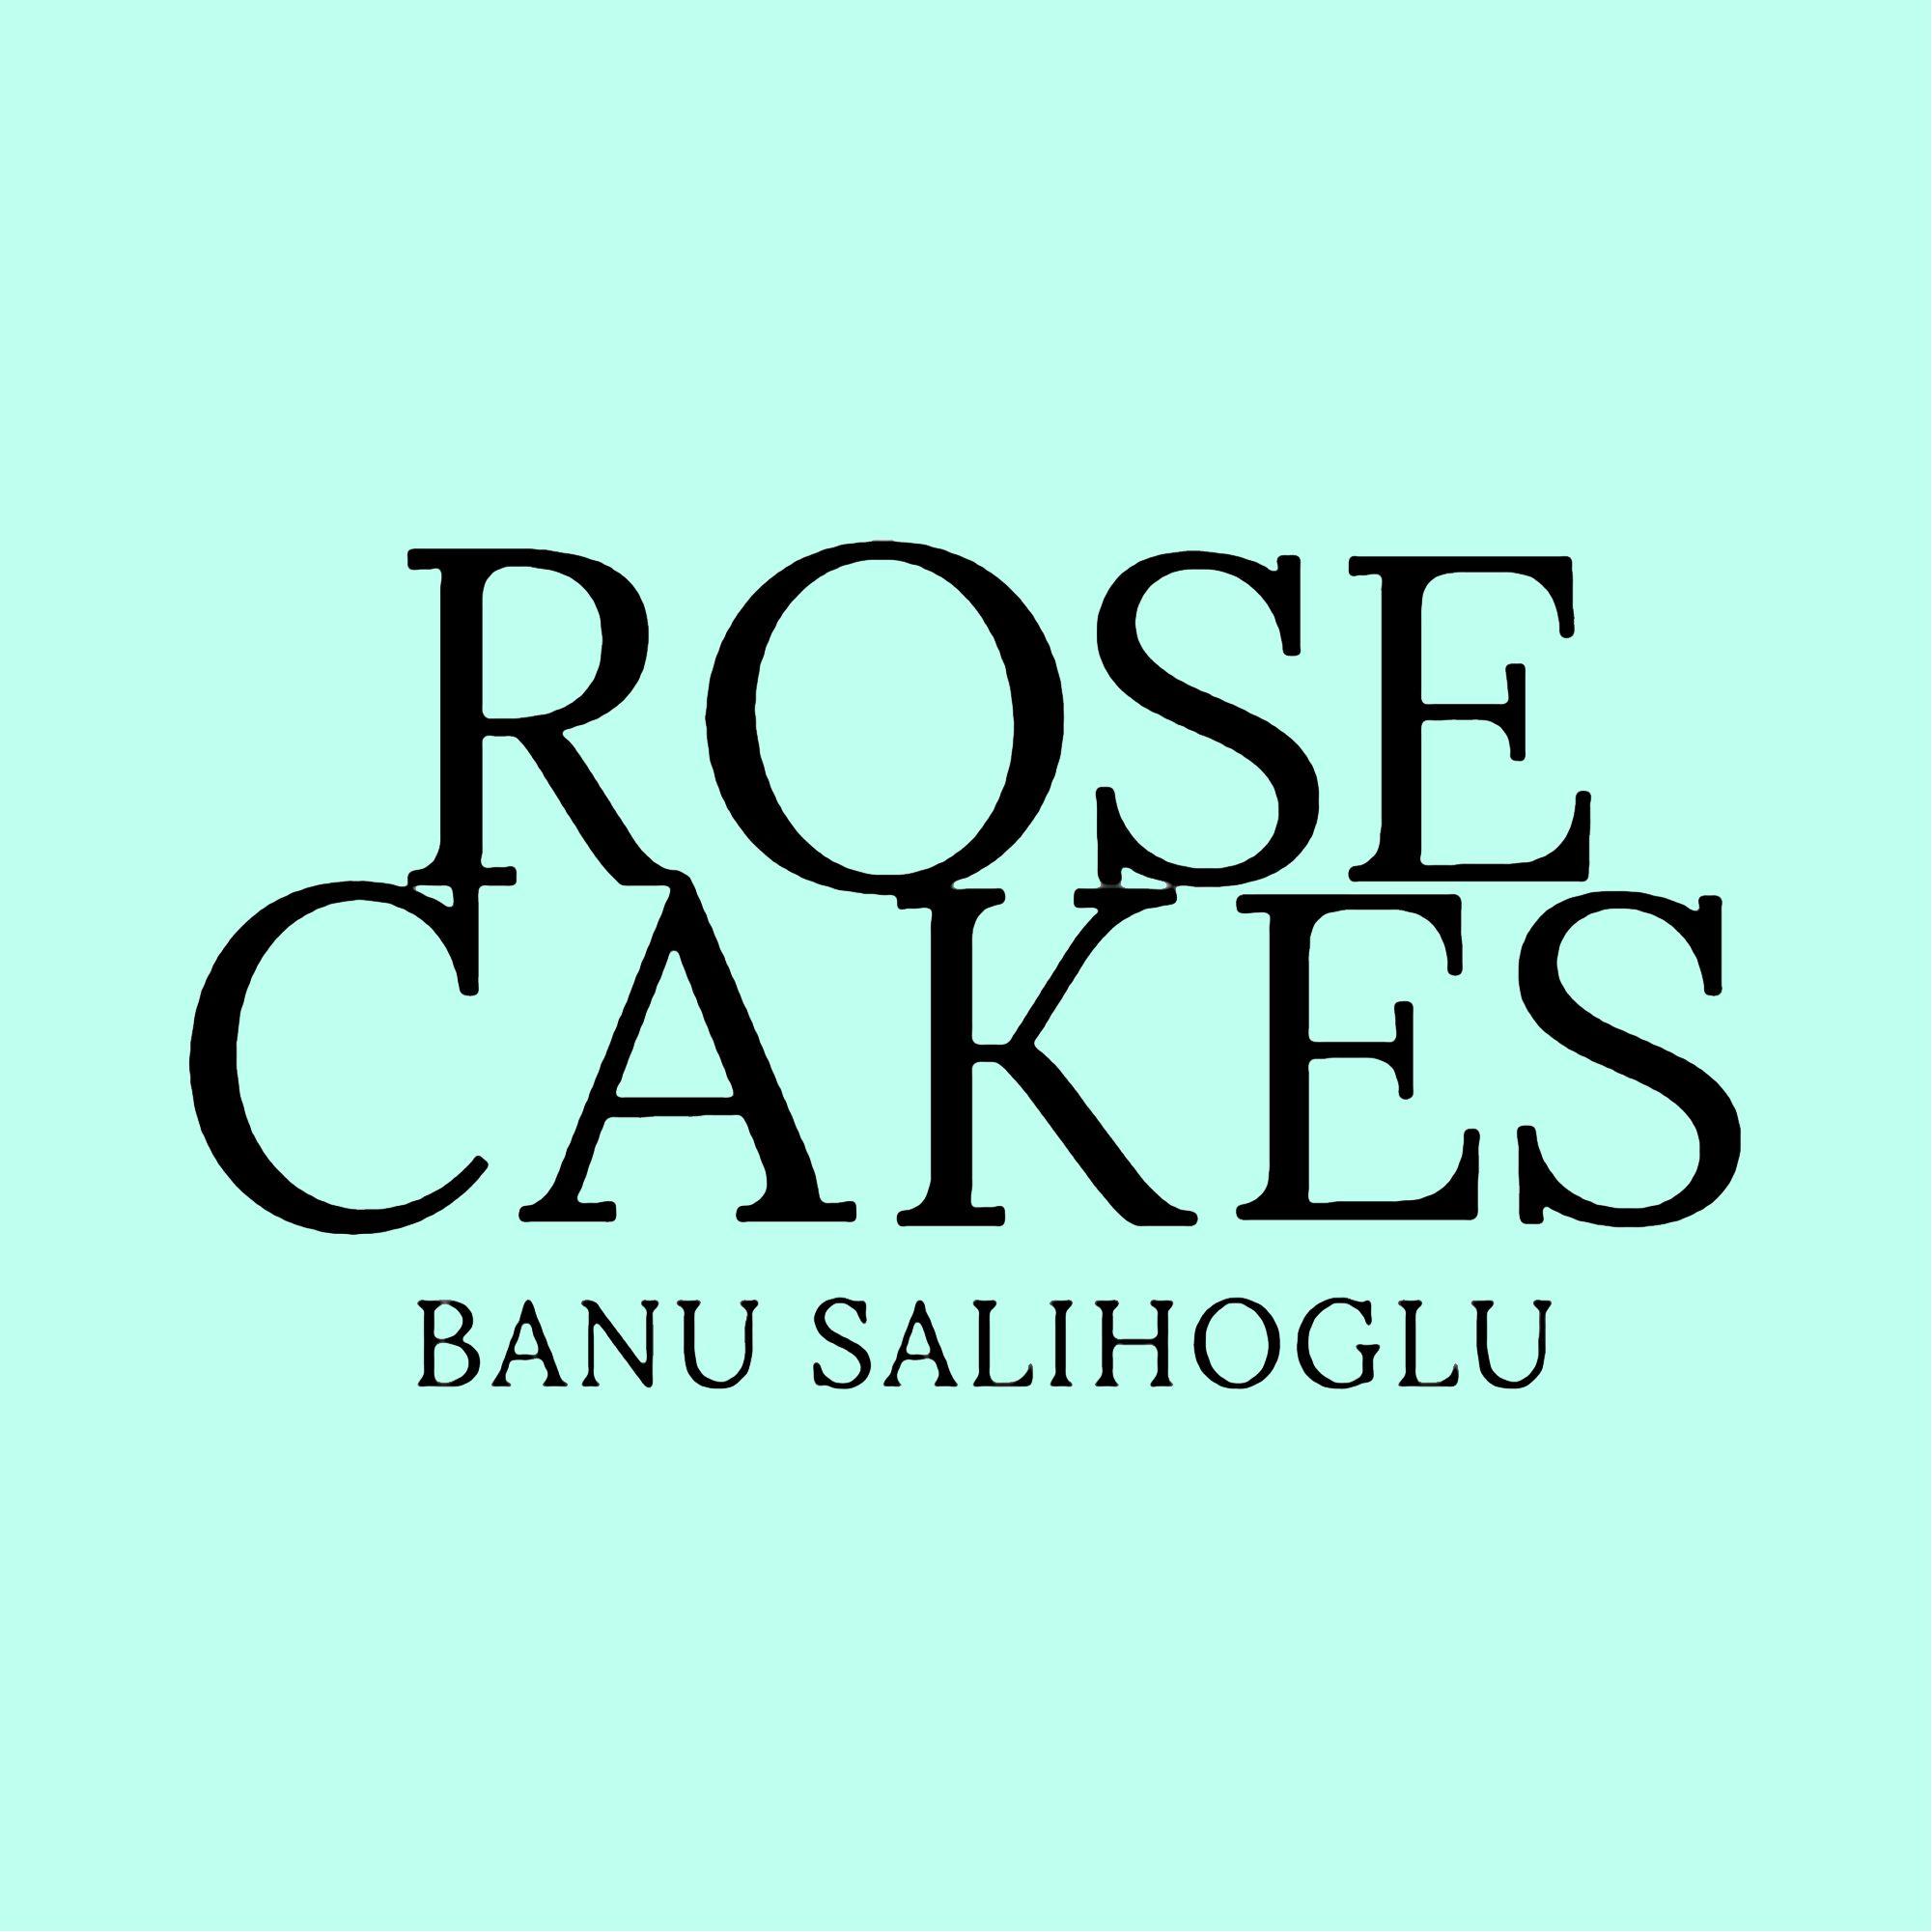 ROSE CAKES